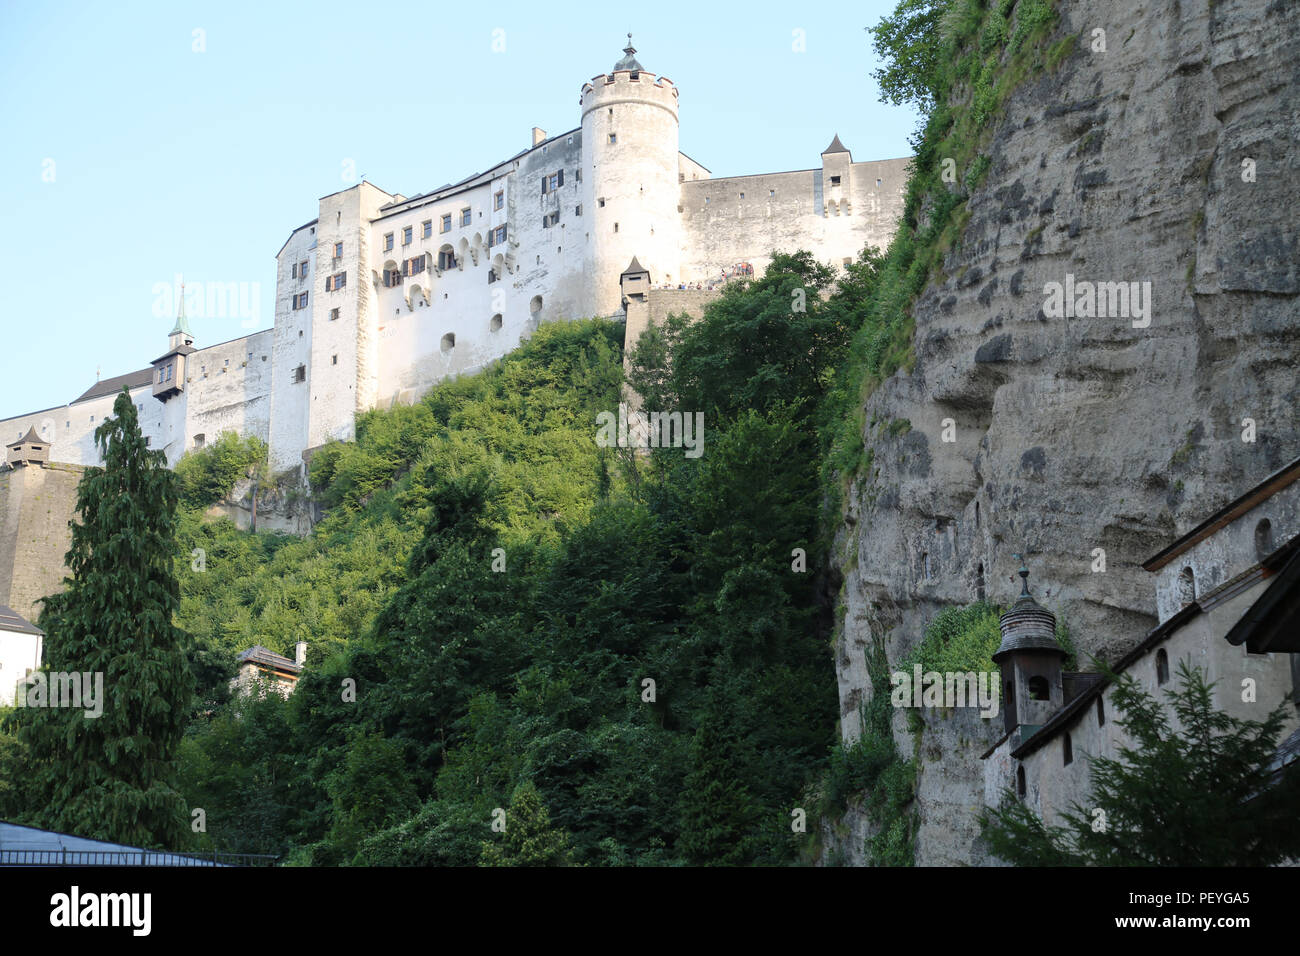 Hohensalzburg Castle or Saltzburg Castle, Austria Stock Photo